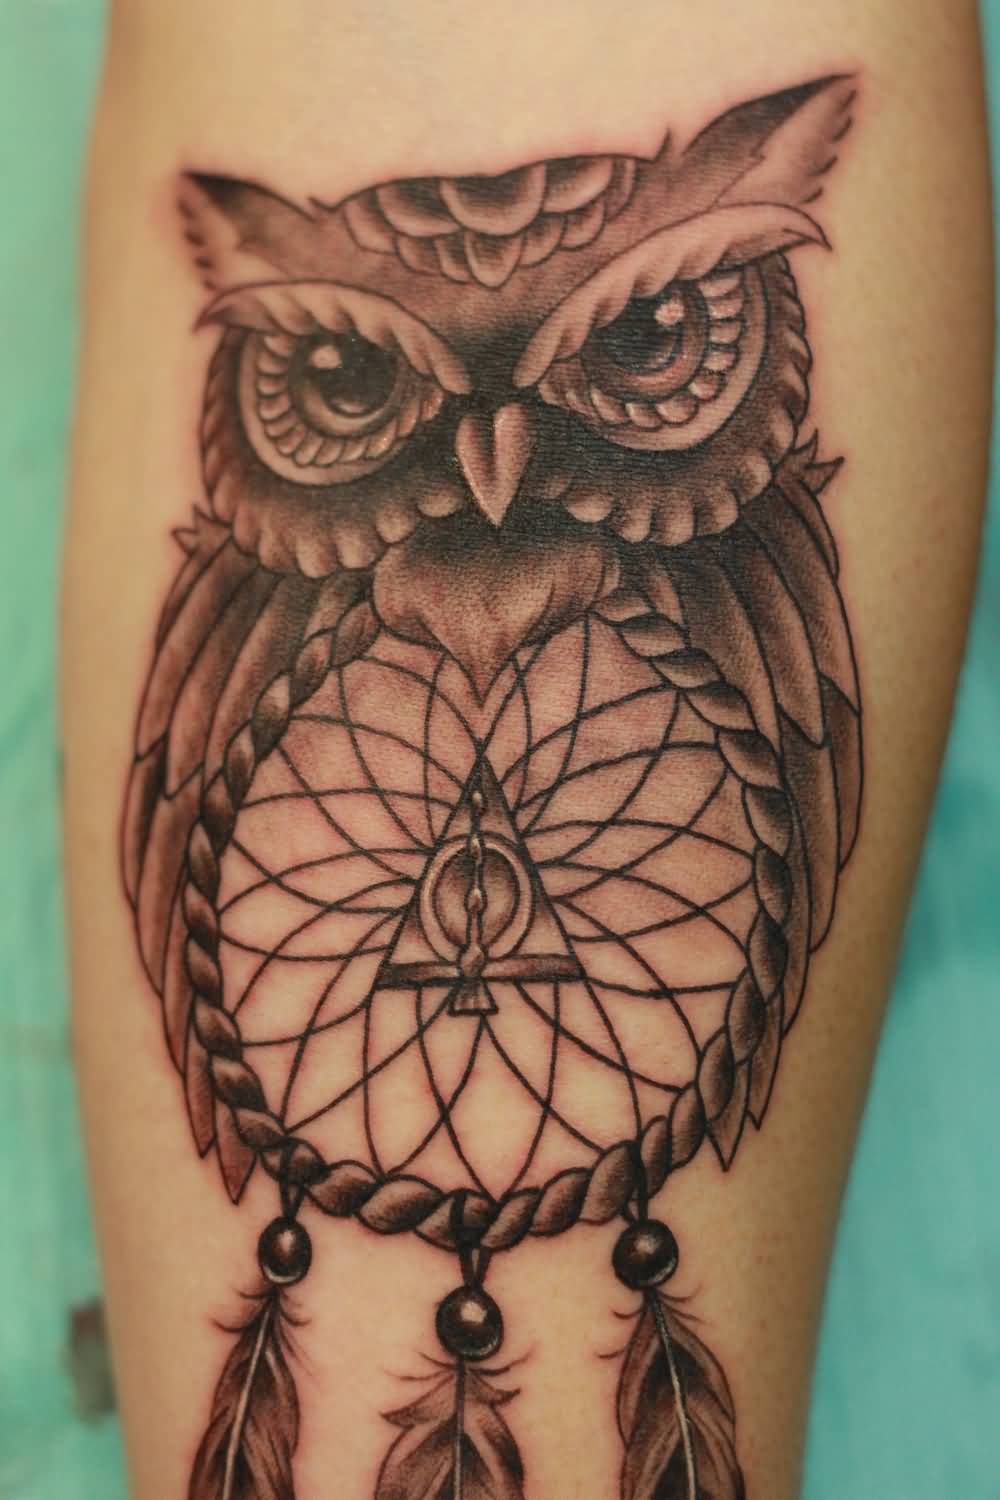 Black Ink Owl Dreamcatcher Tattoo Design For Female Forearm